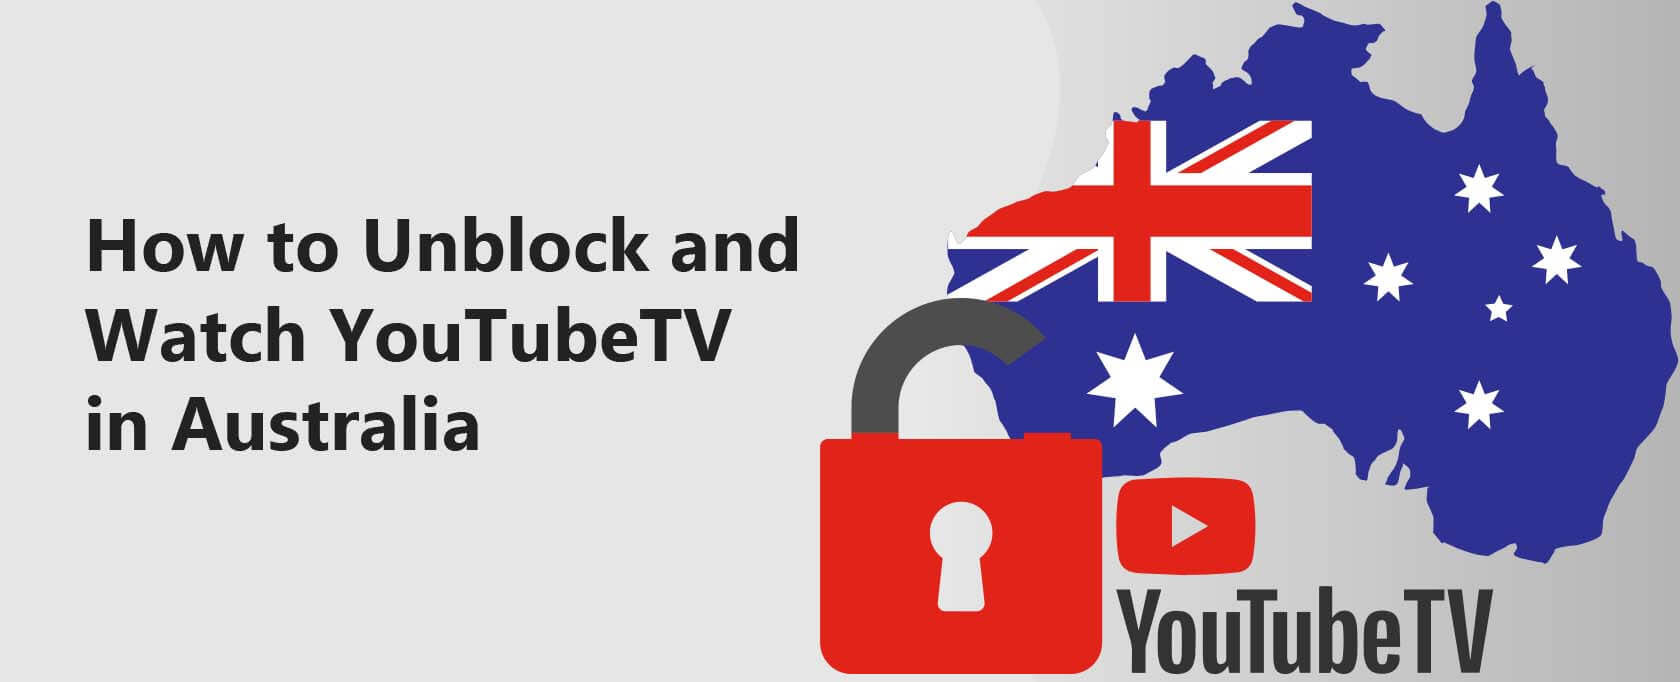 Unblock YouTube TV in Australia